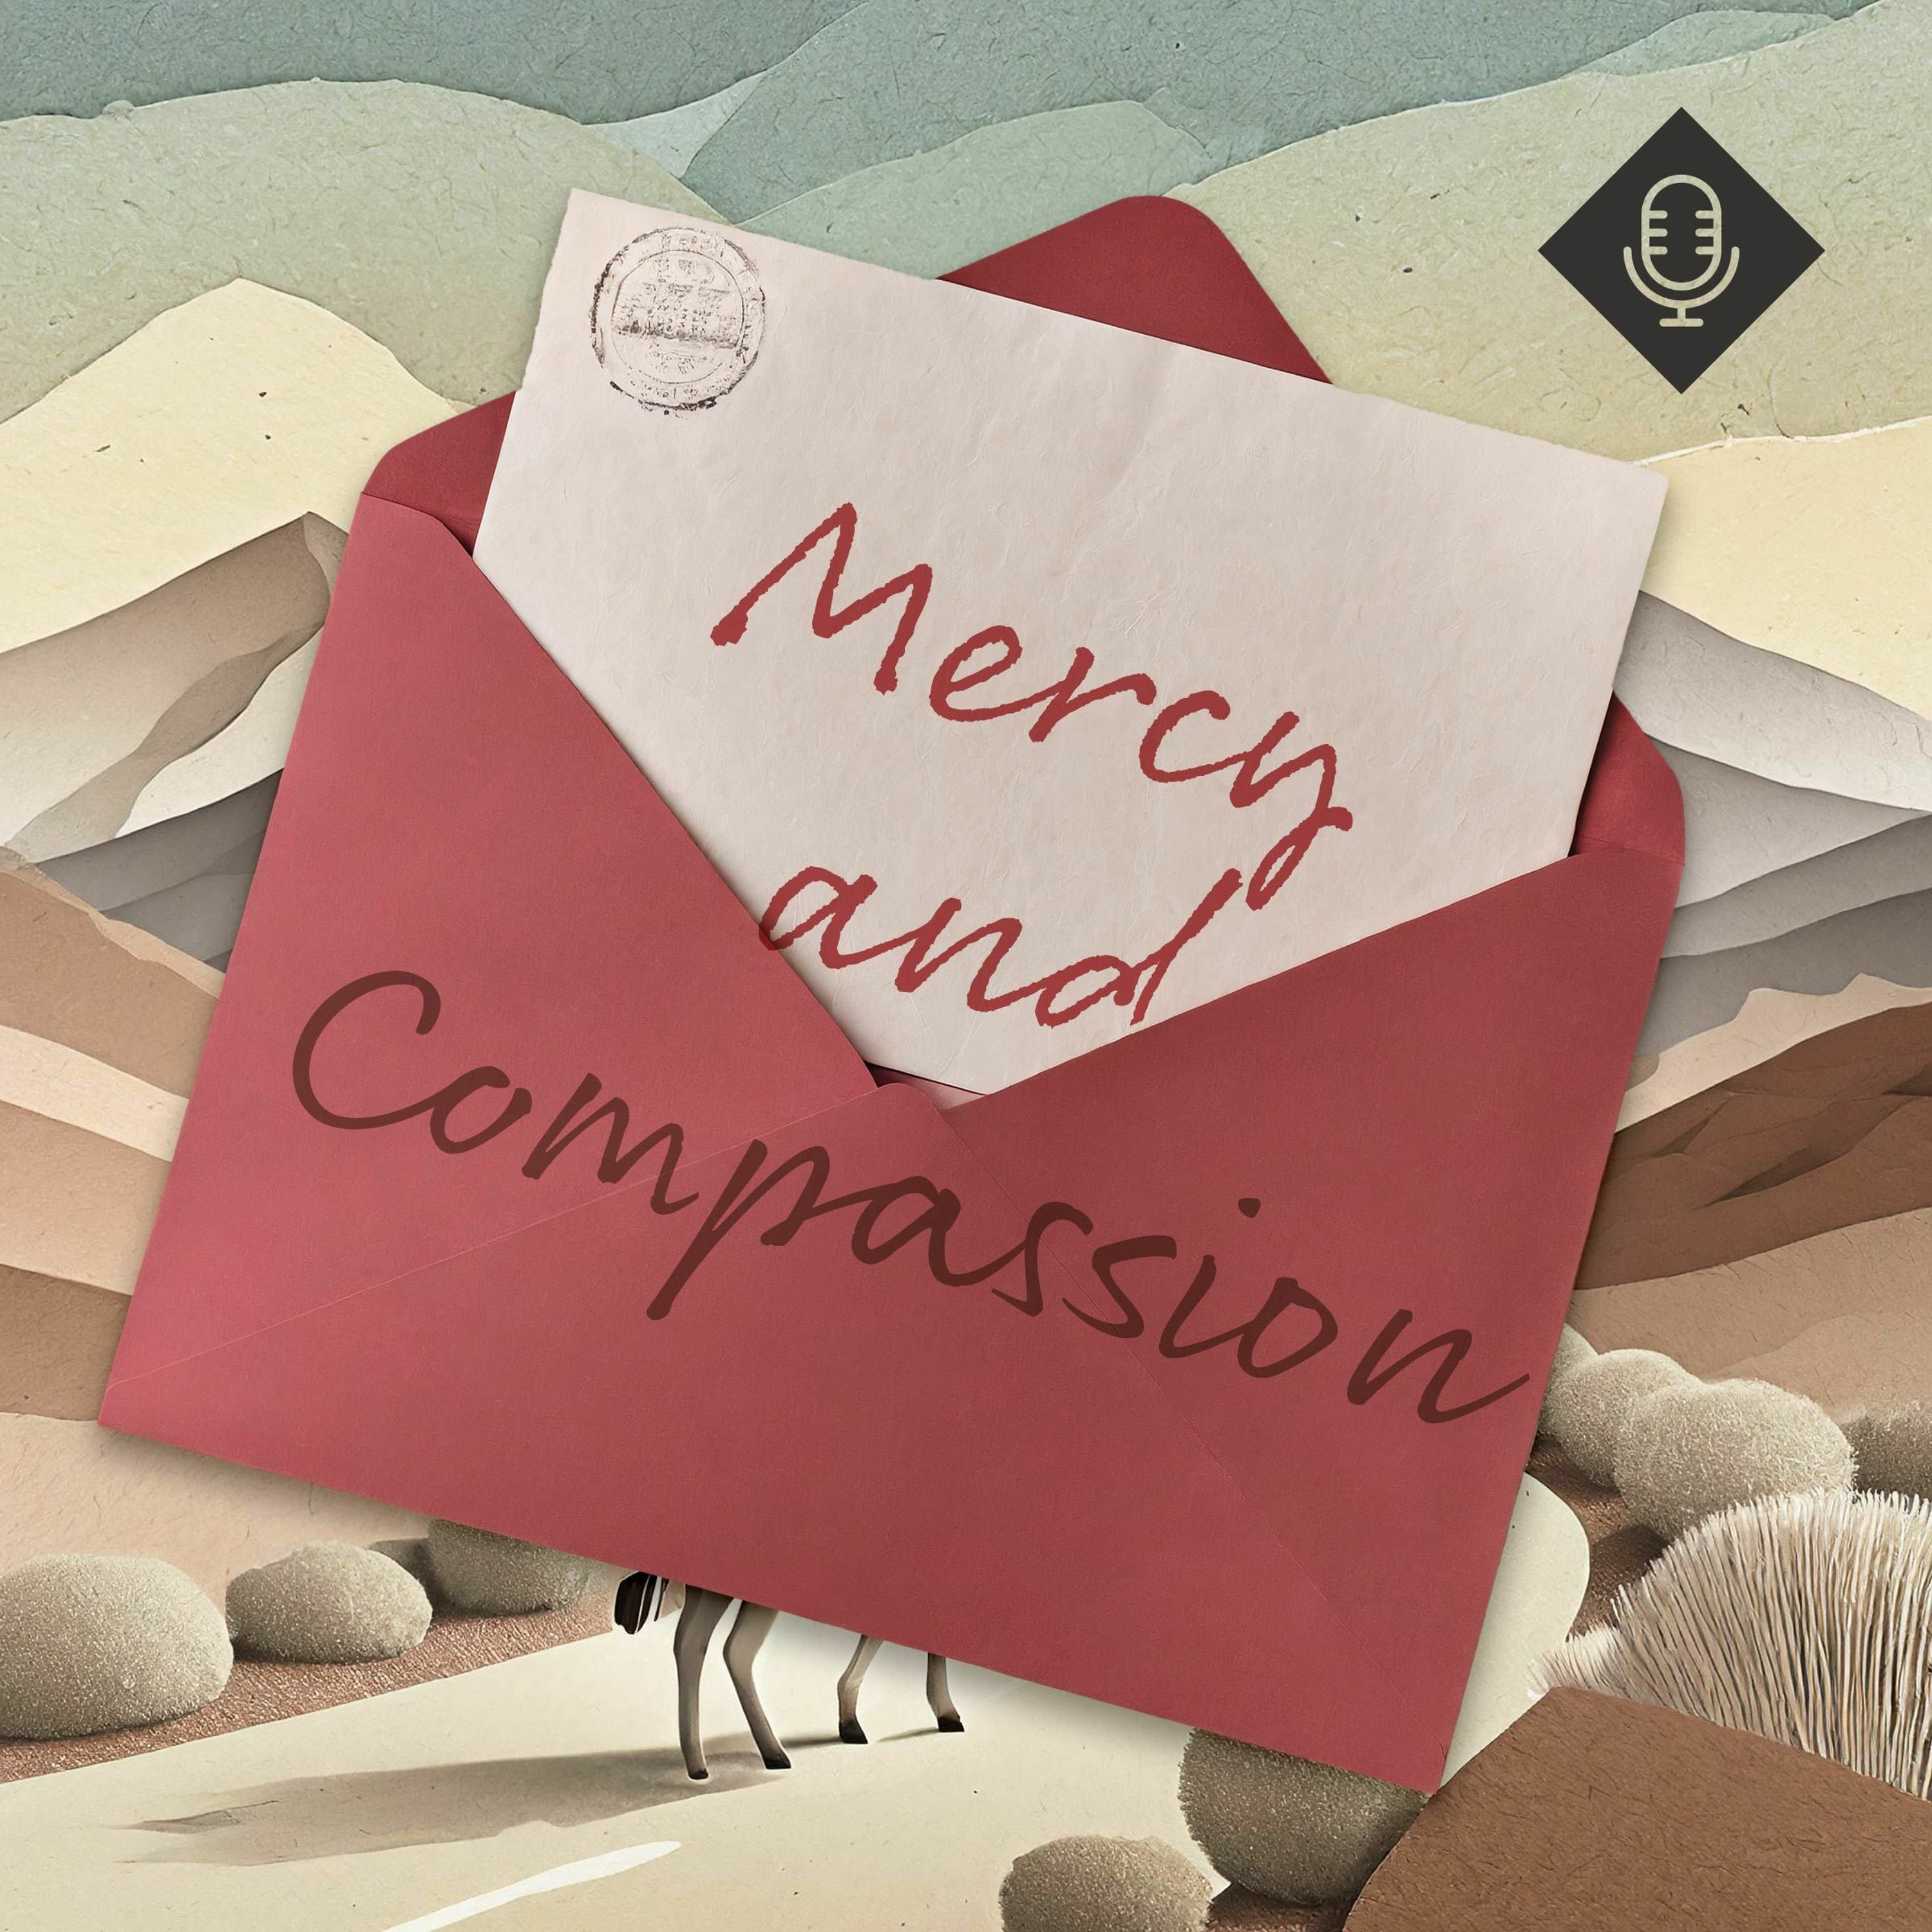 ’Mercy and Compassion’ / Neil Dawson